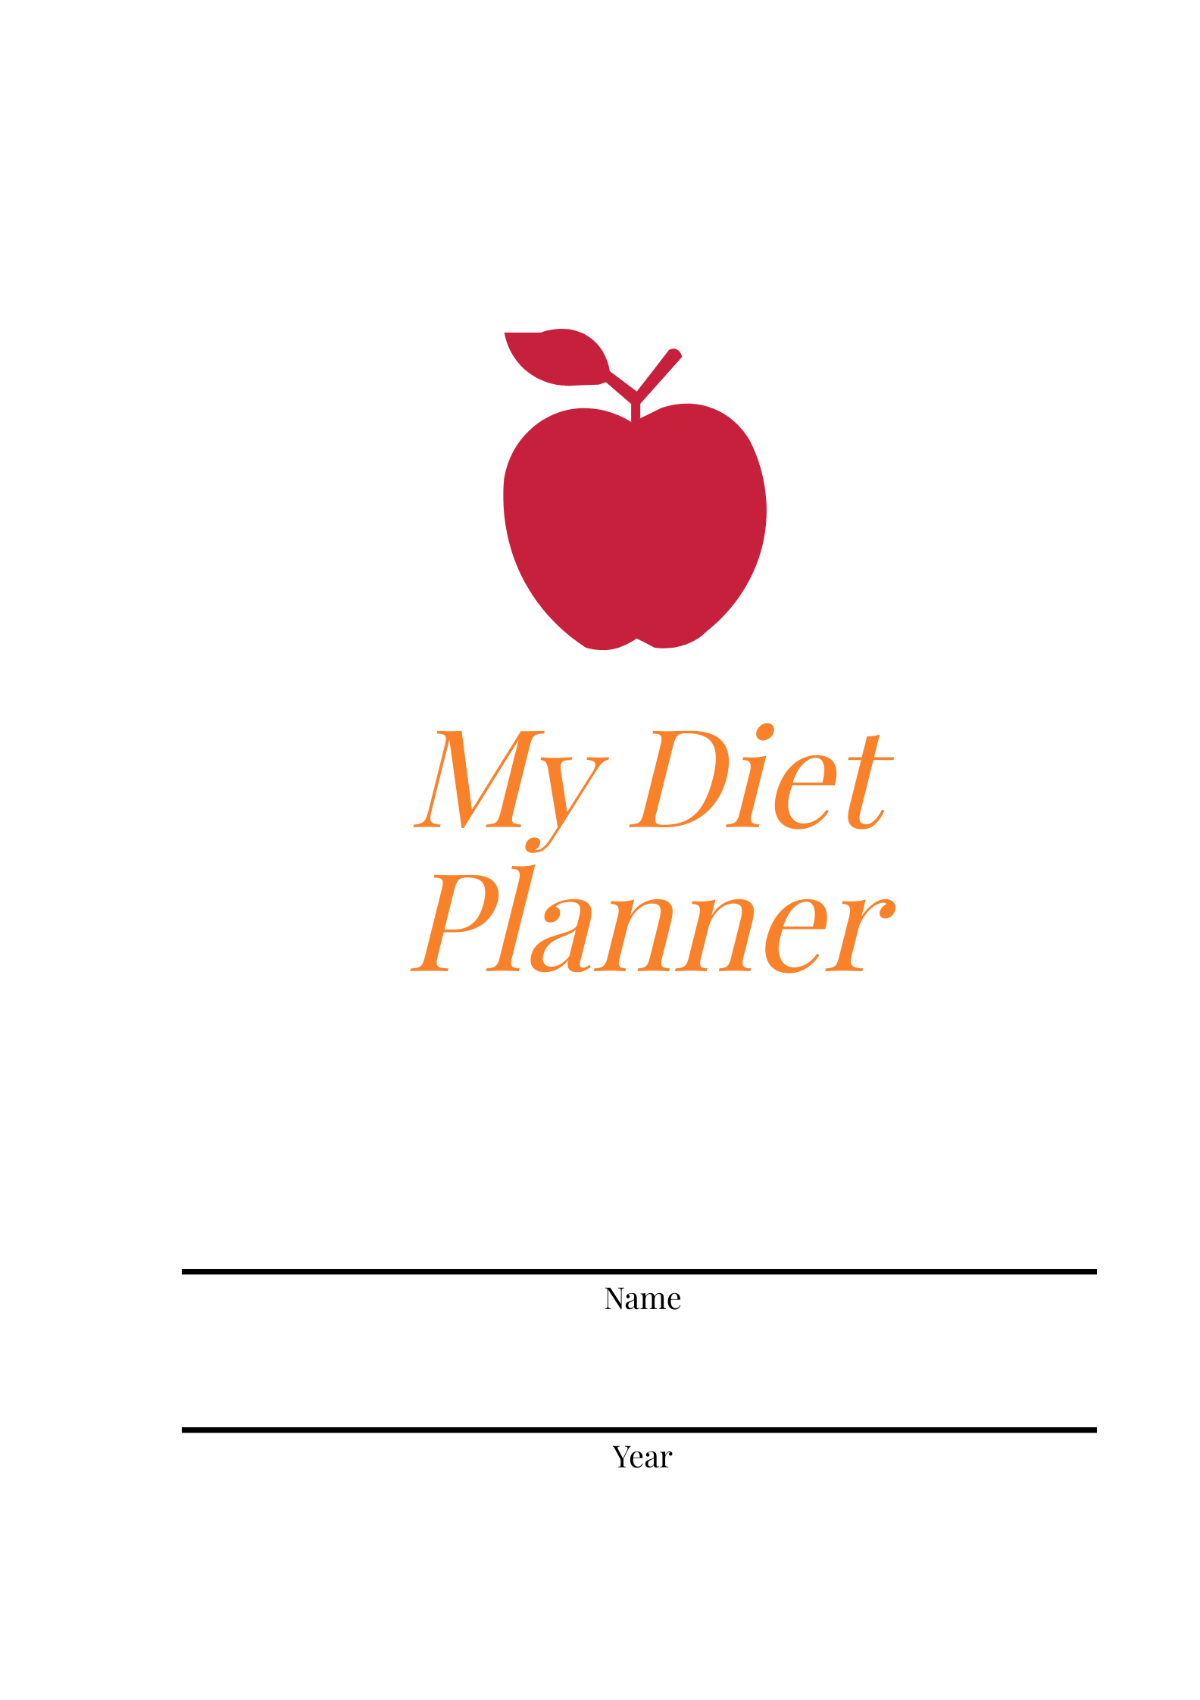 Sample Diet Planner Template